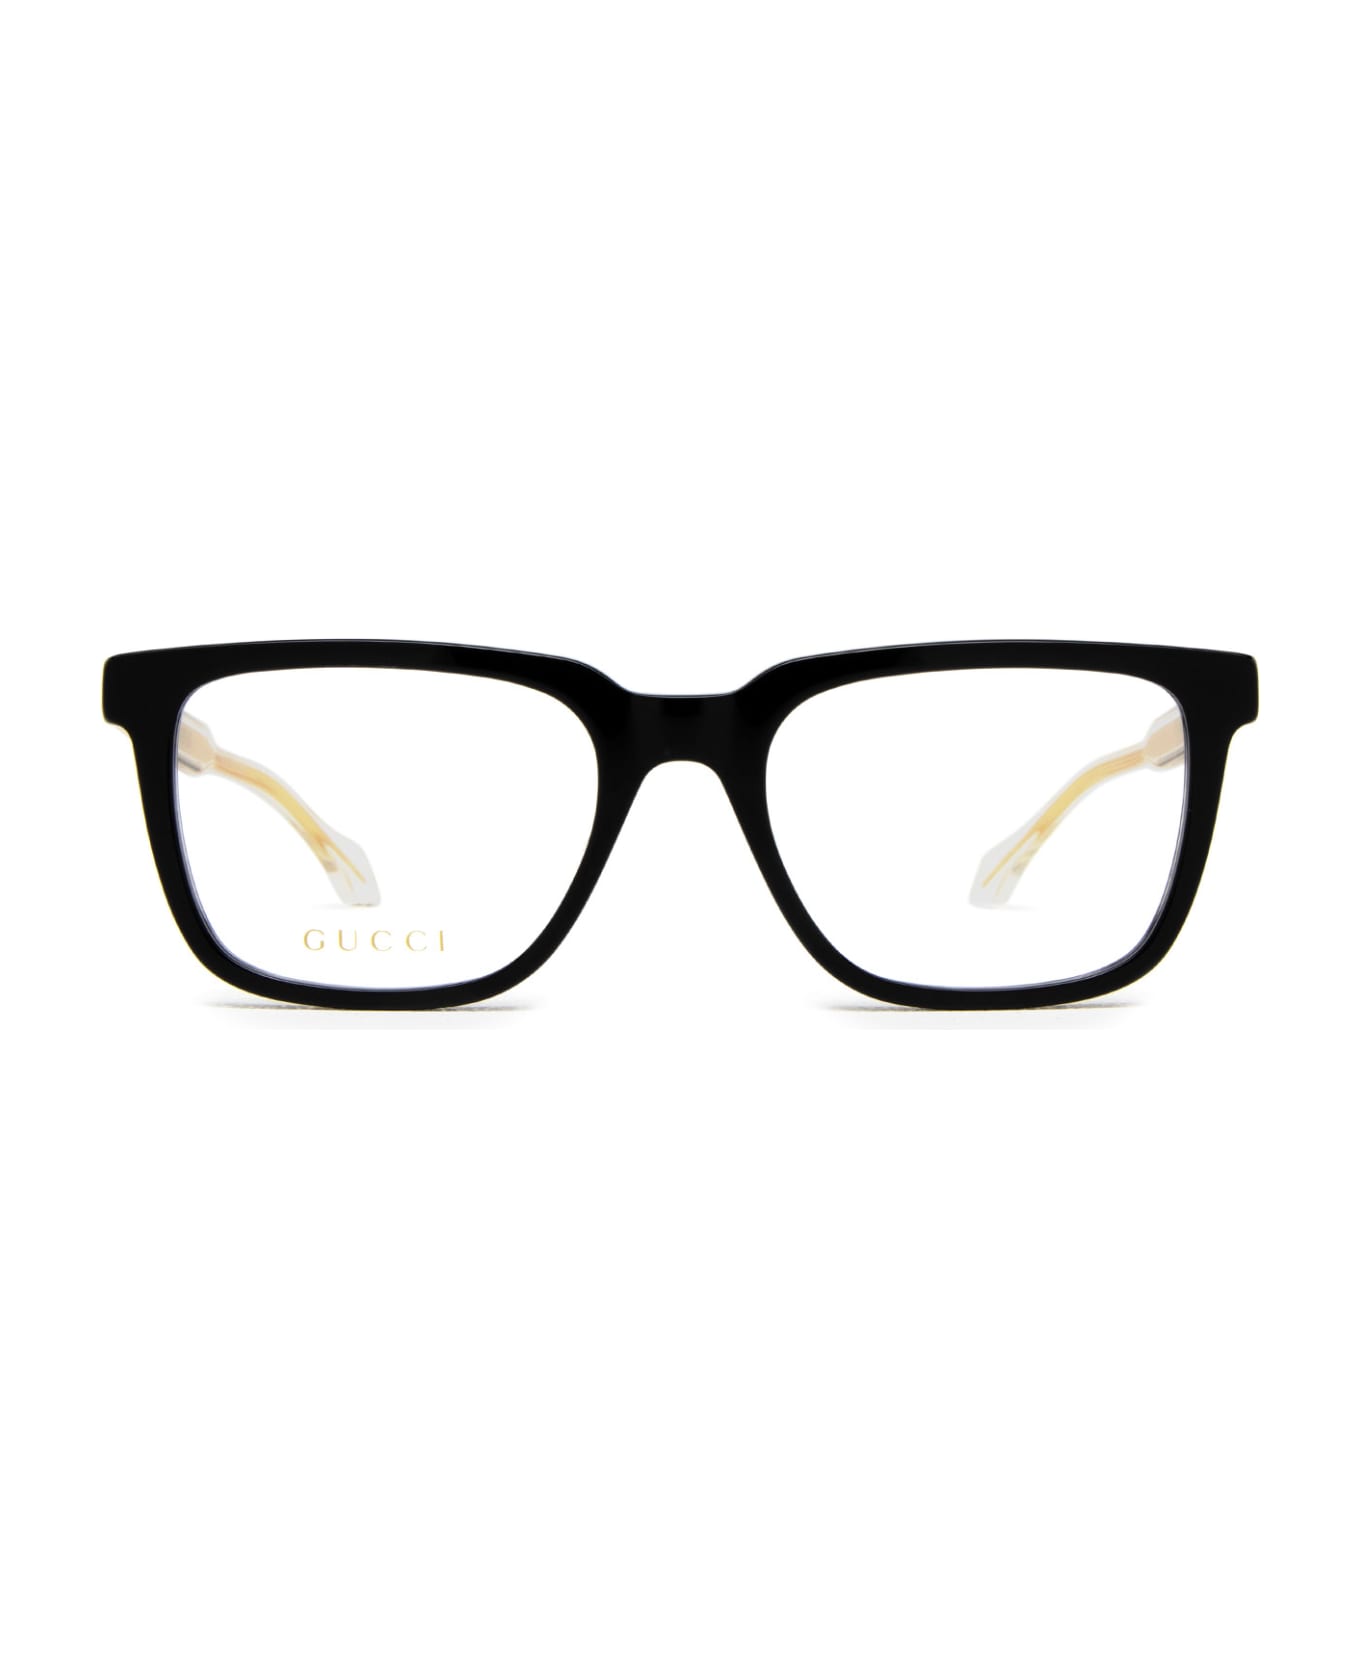 Gucci Eyewear Gg0560on Black Glasses - Black